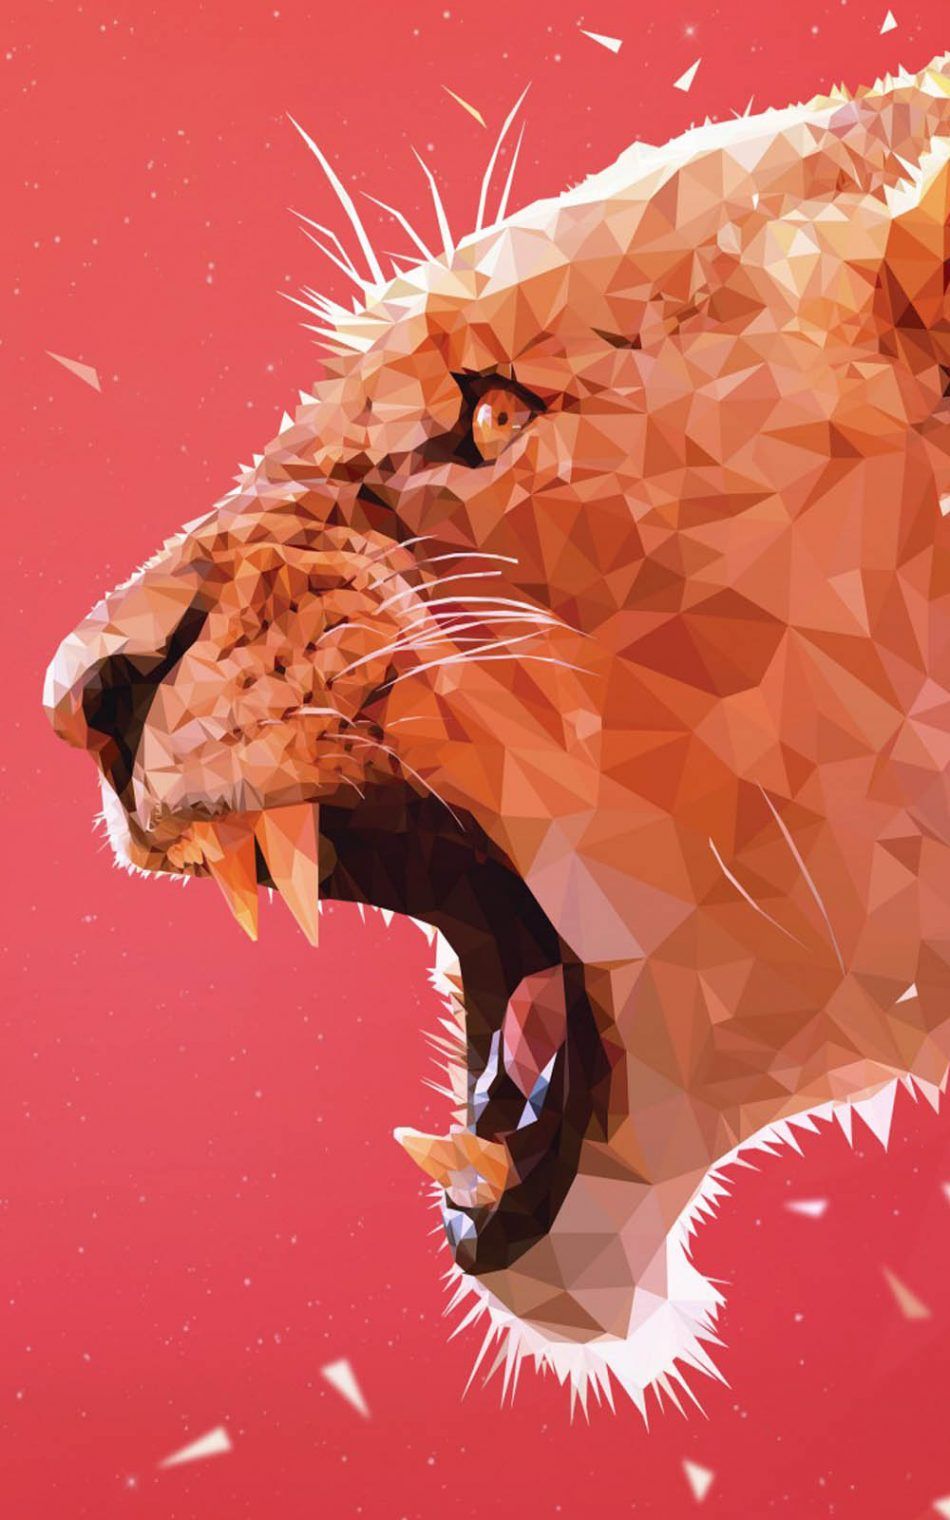 Roaring Lion Abstract Artwork 4K Ultra HD Mobile Wallpaper